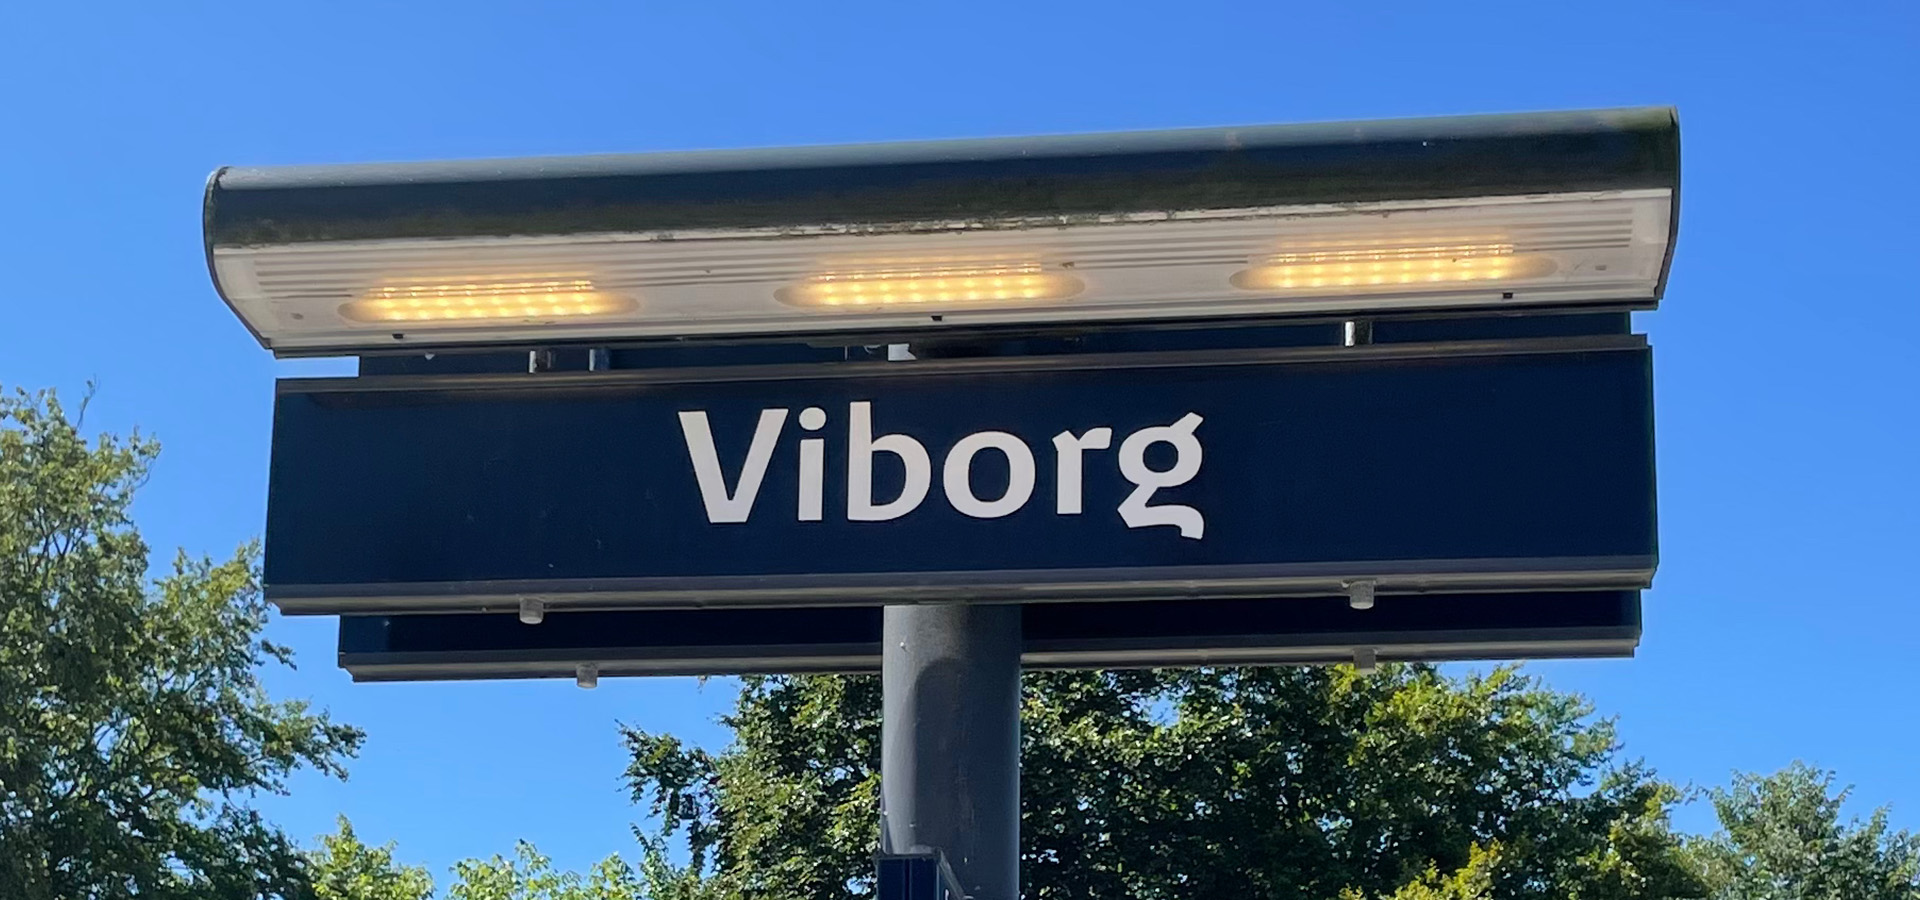 Viborg haveservice